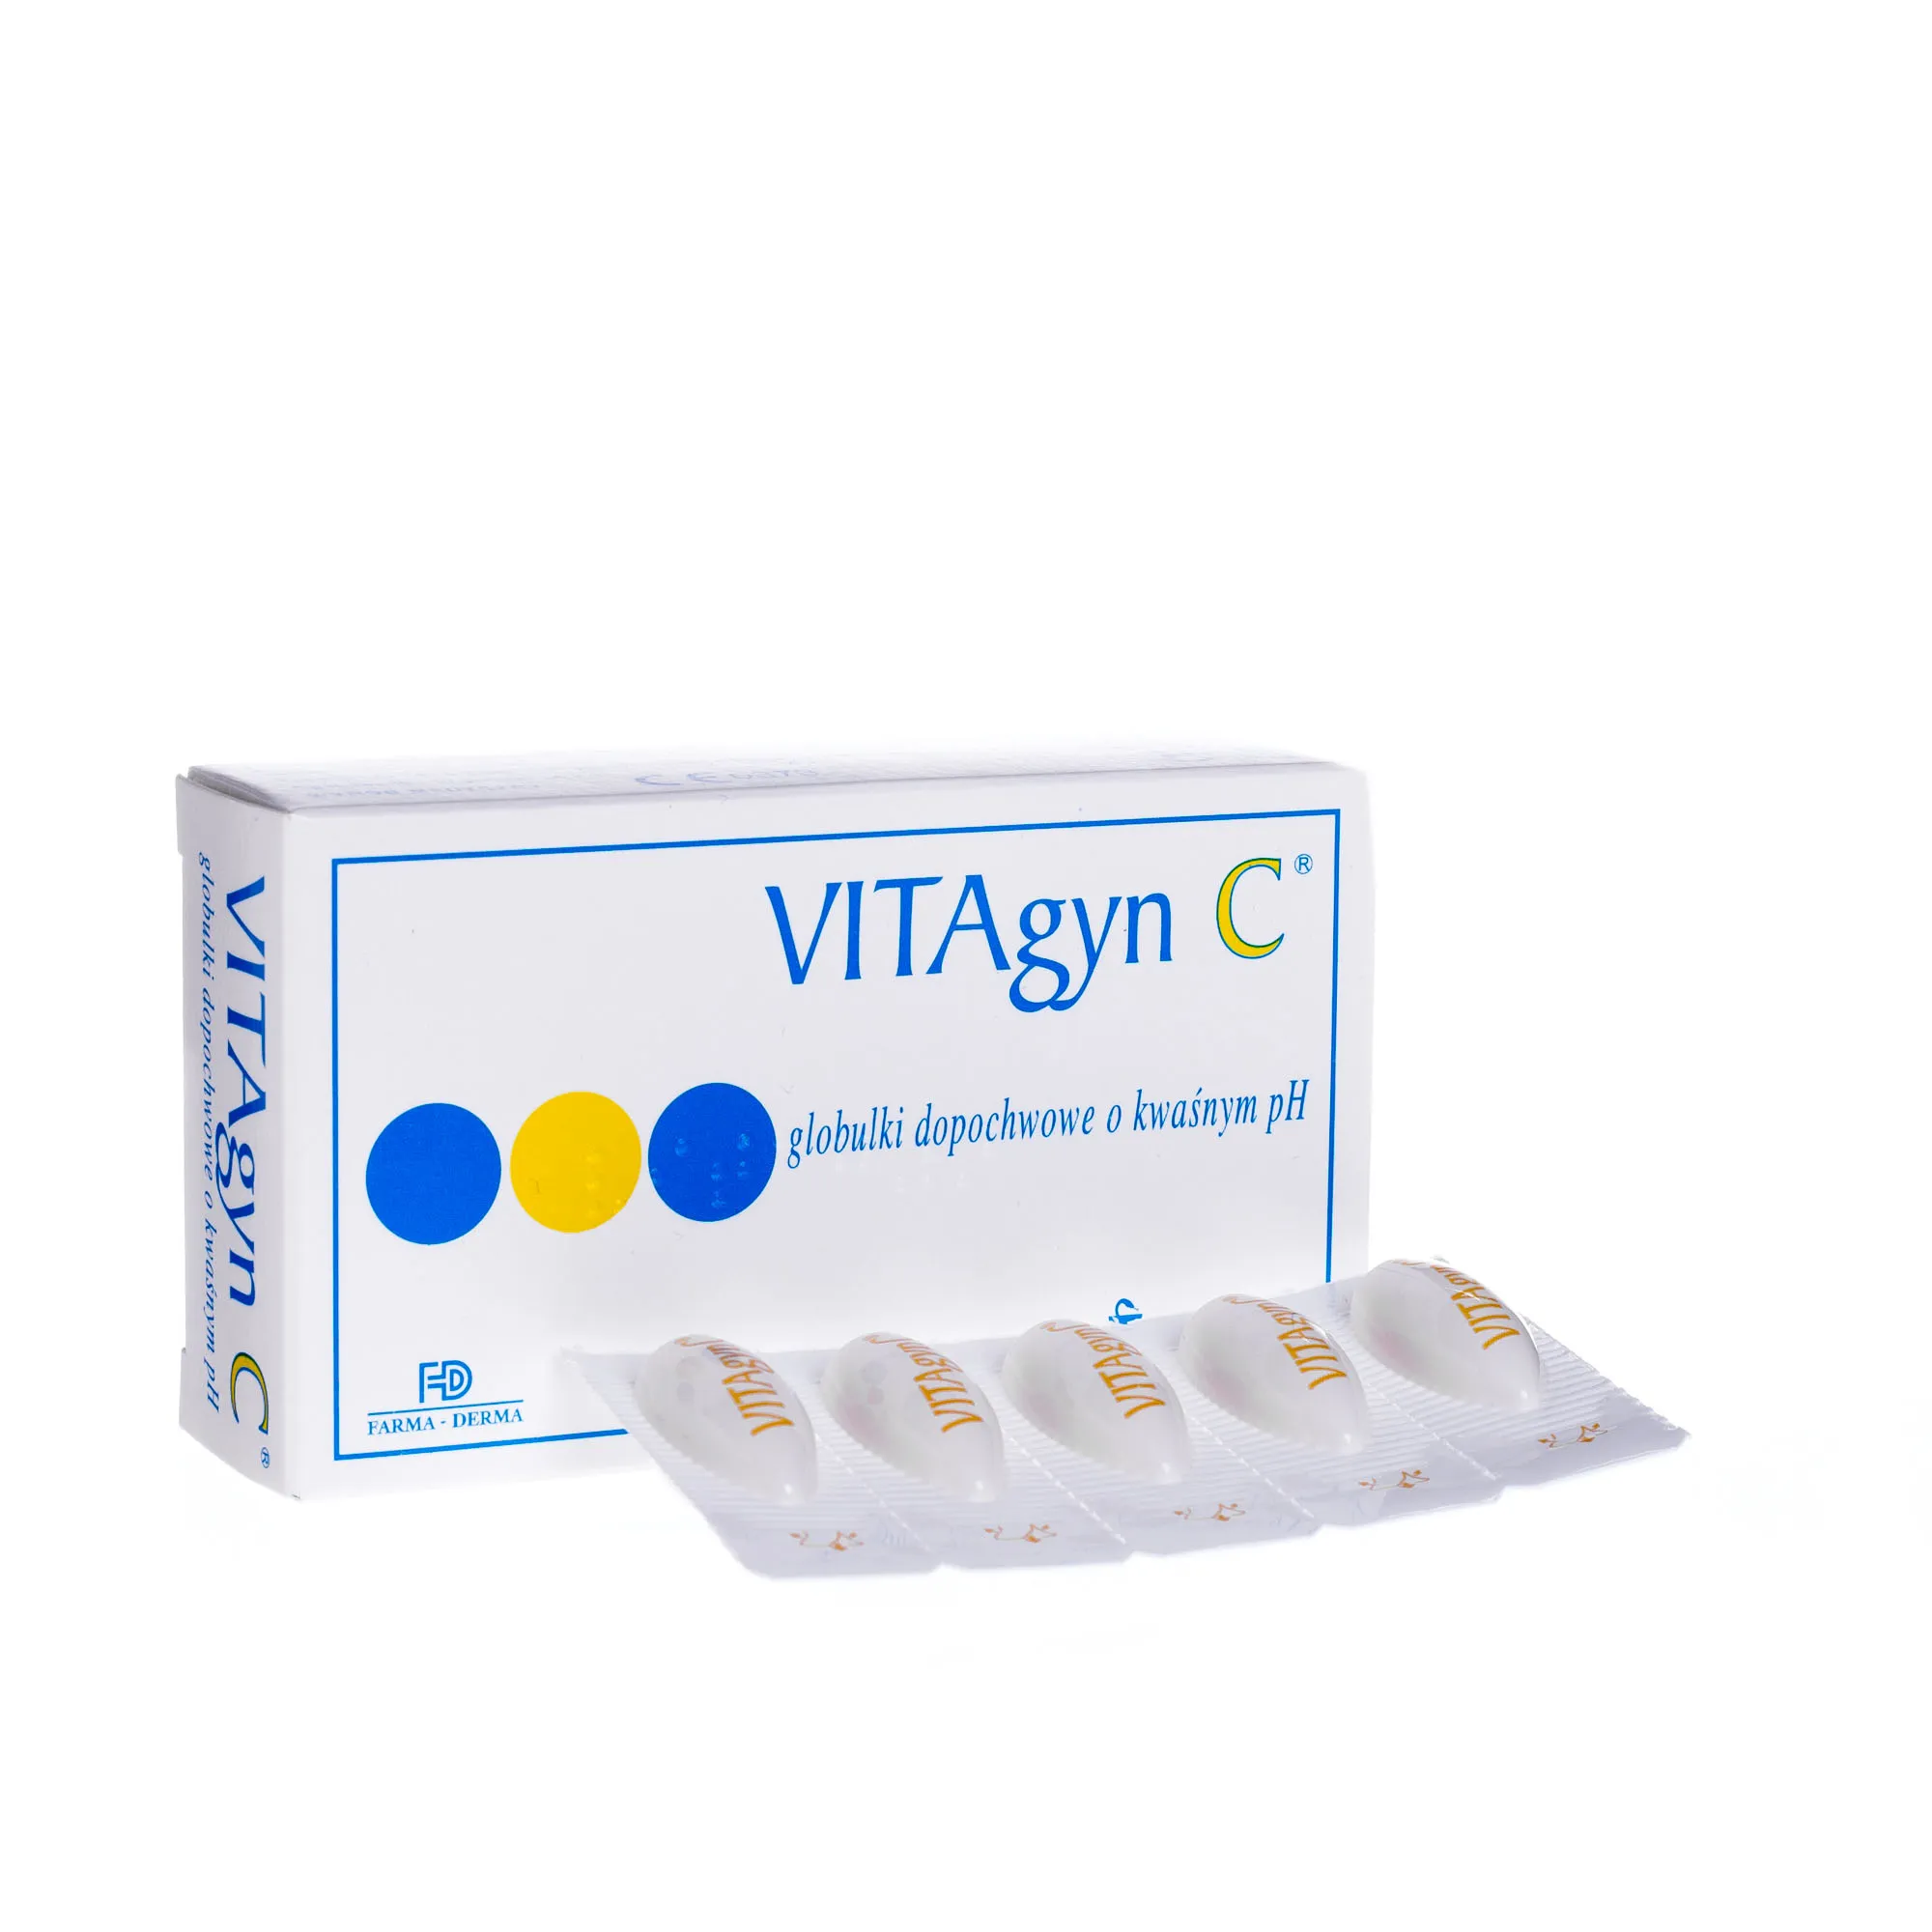 VITAgyn C, globulki dopochwowe o kwaśnym pH, 10 sztuk